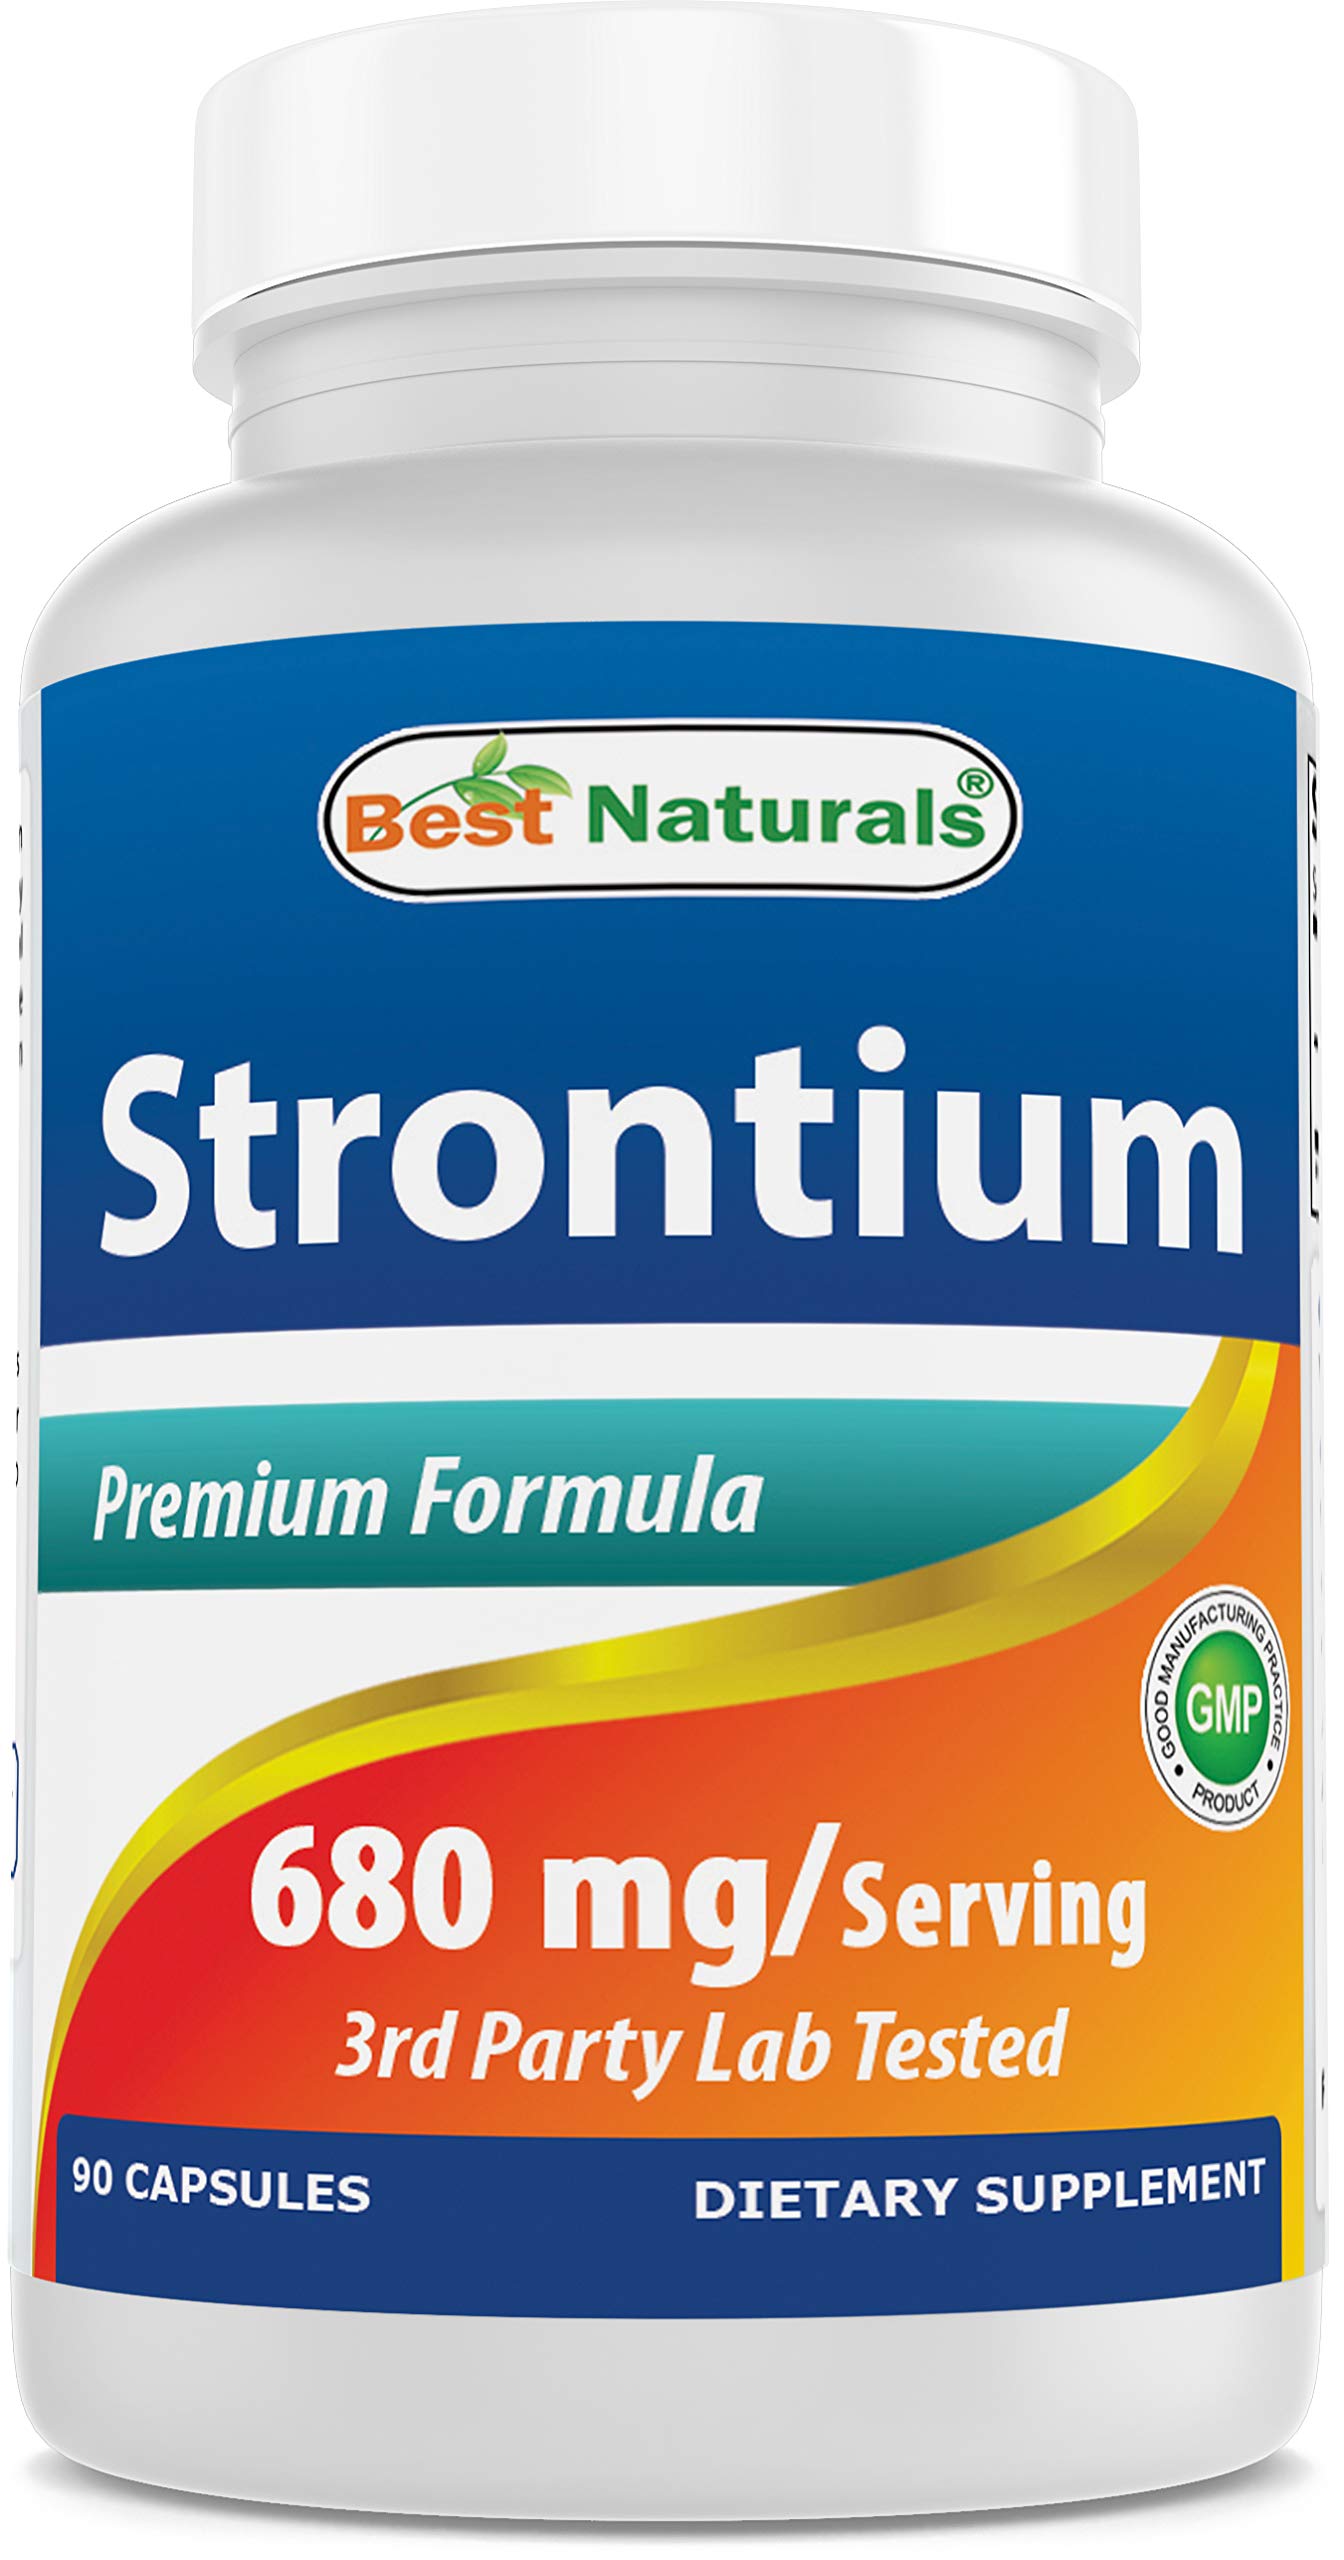 Best Naturals Strontium Bone Building Formula 680mg/serving 90 Capsules